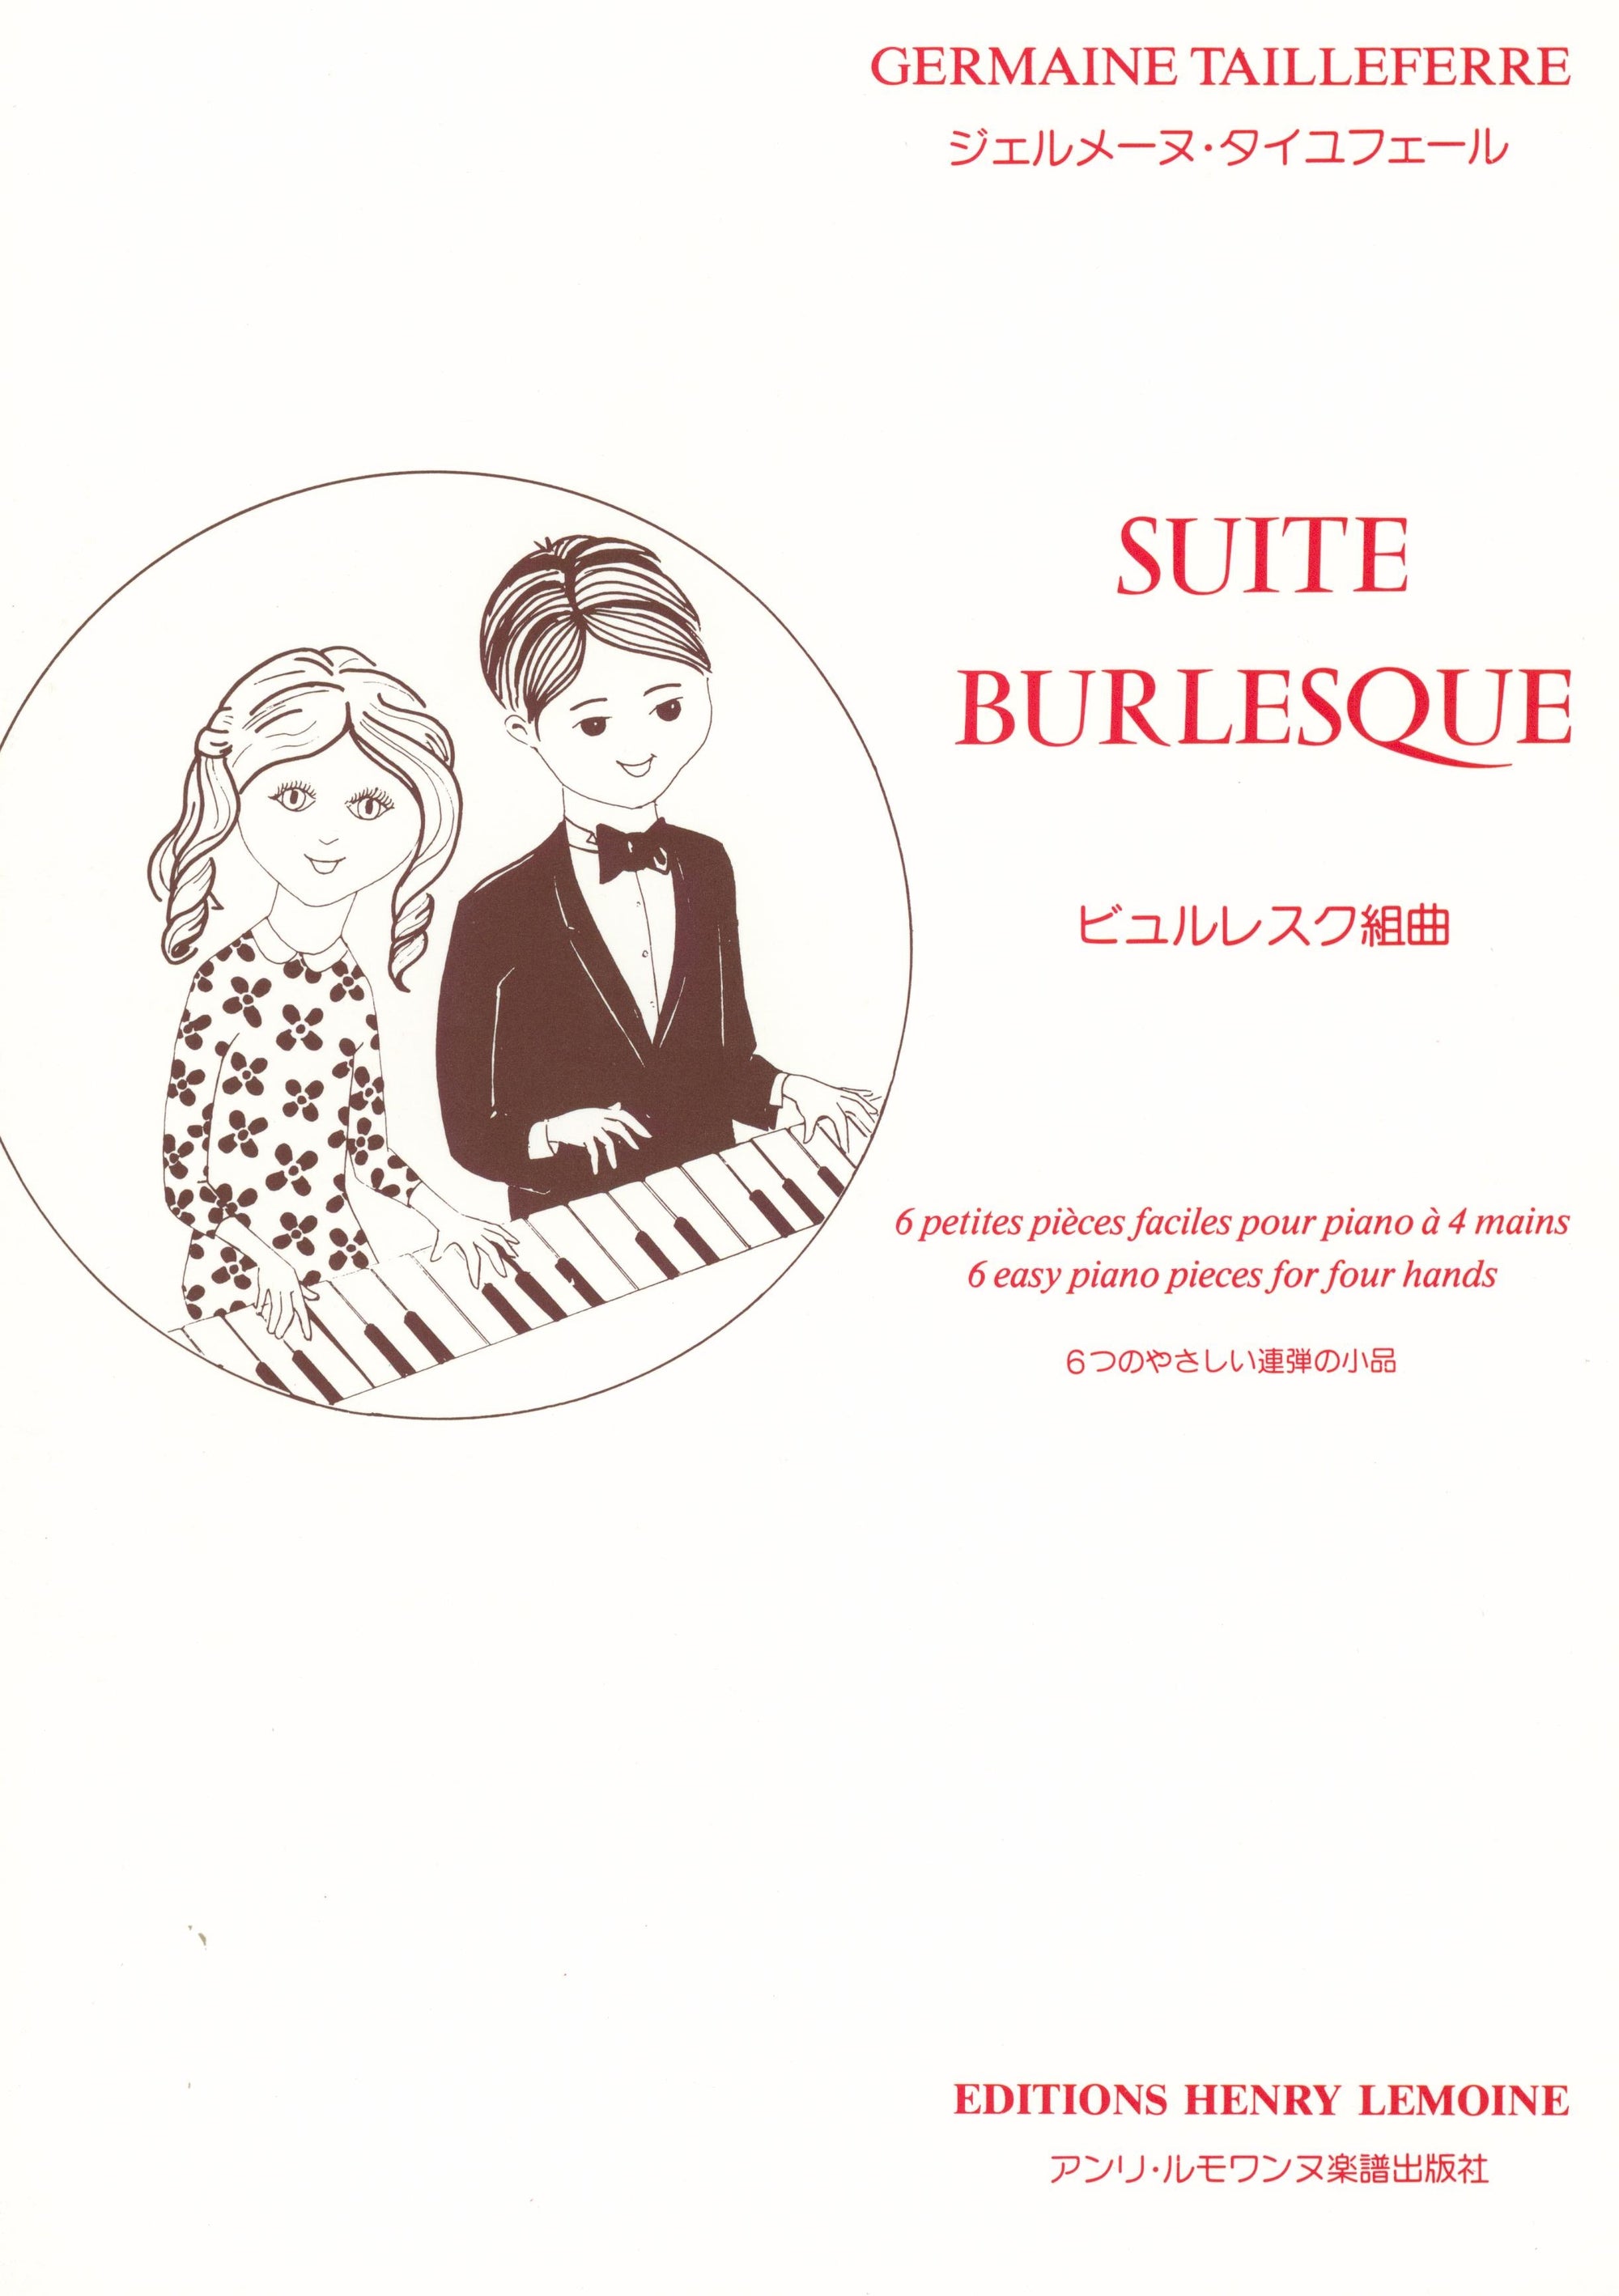 Tailleferre: Suite Burlesque